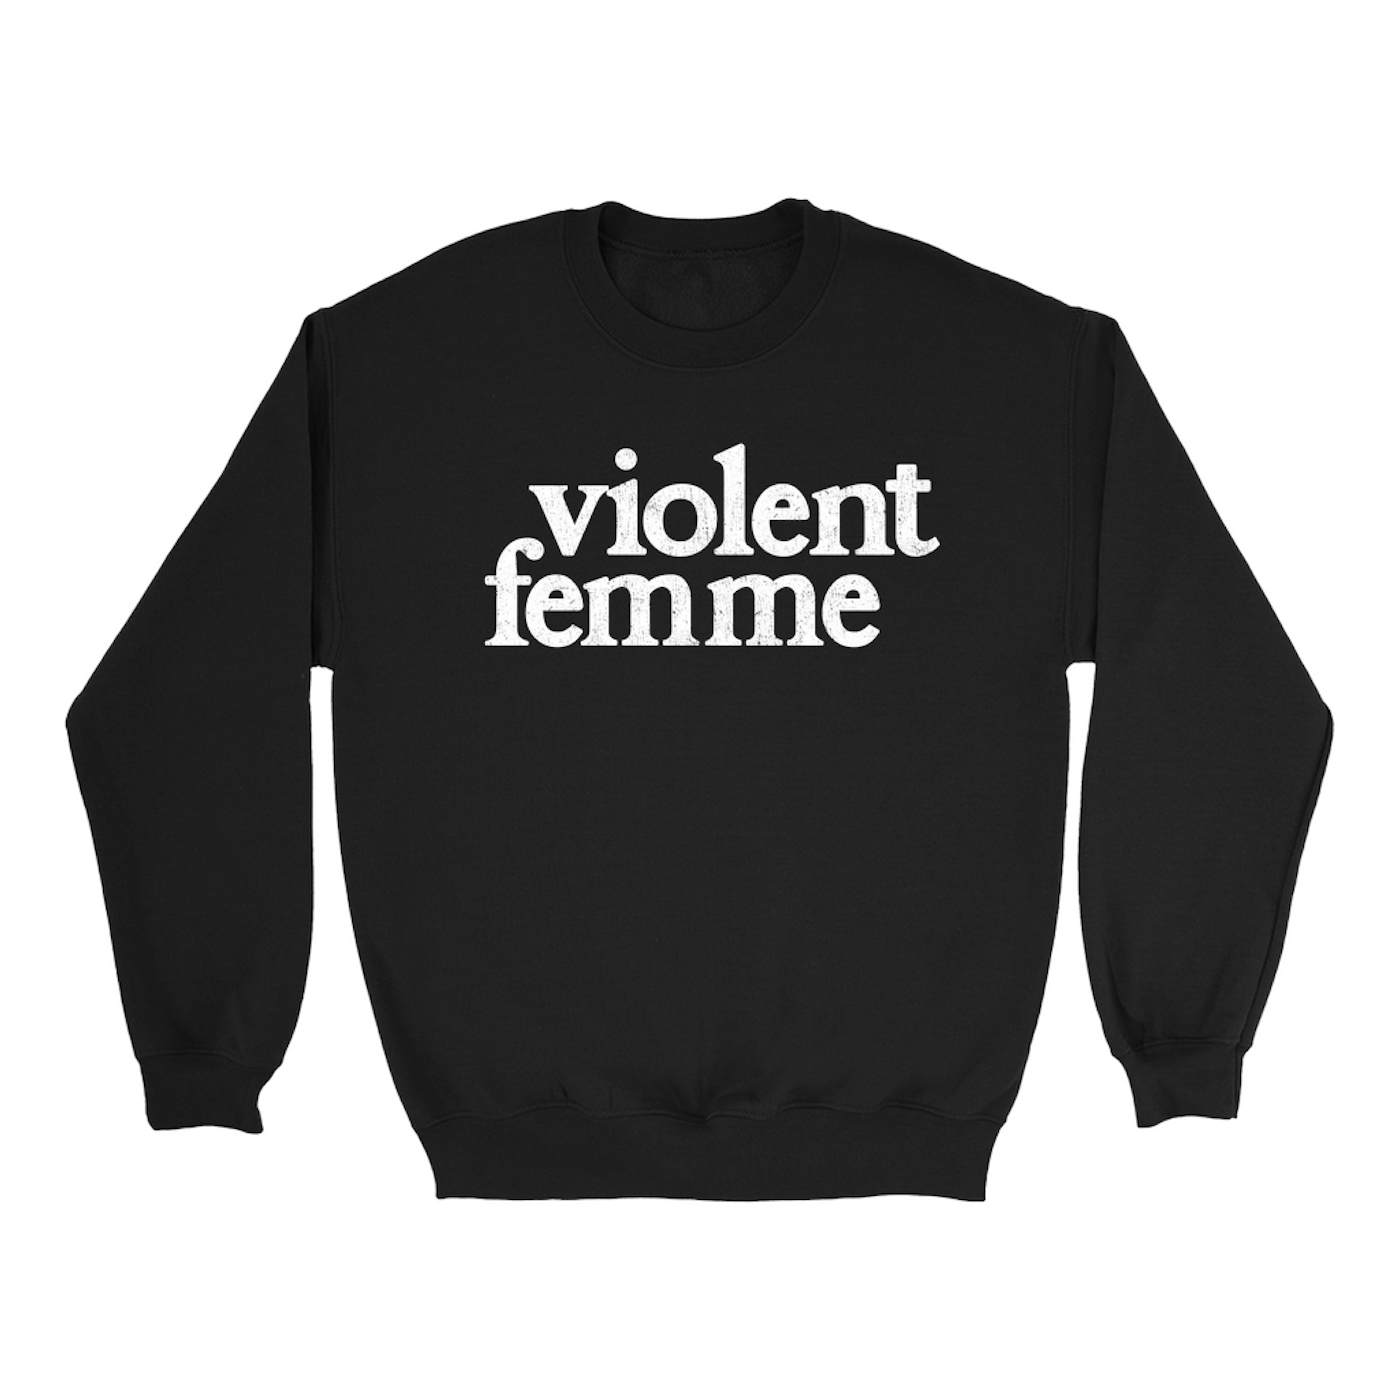 Violent Femme Worn By Sweatshirt - Vince Staples